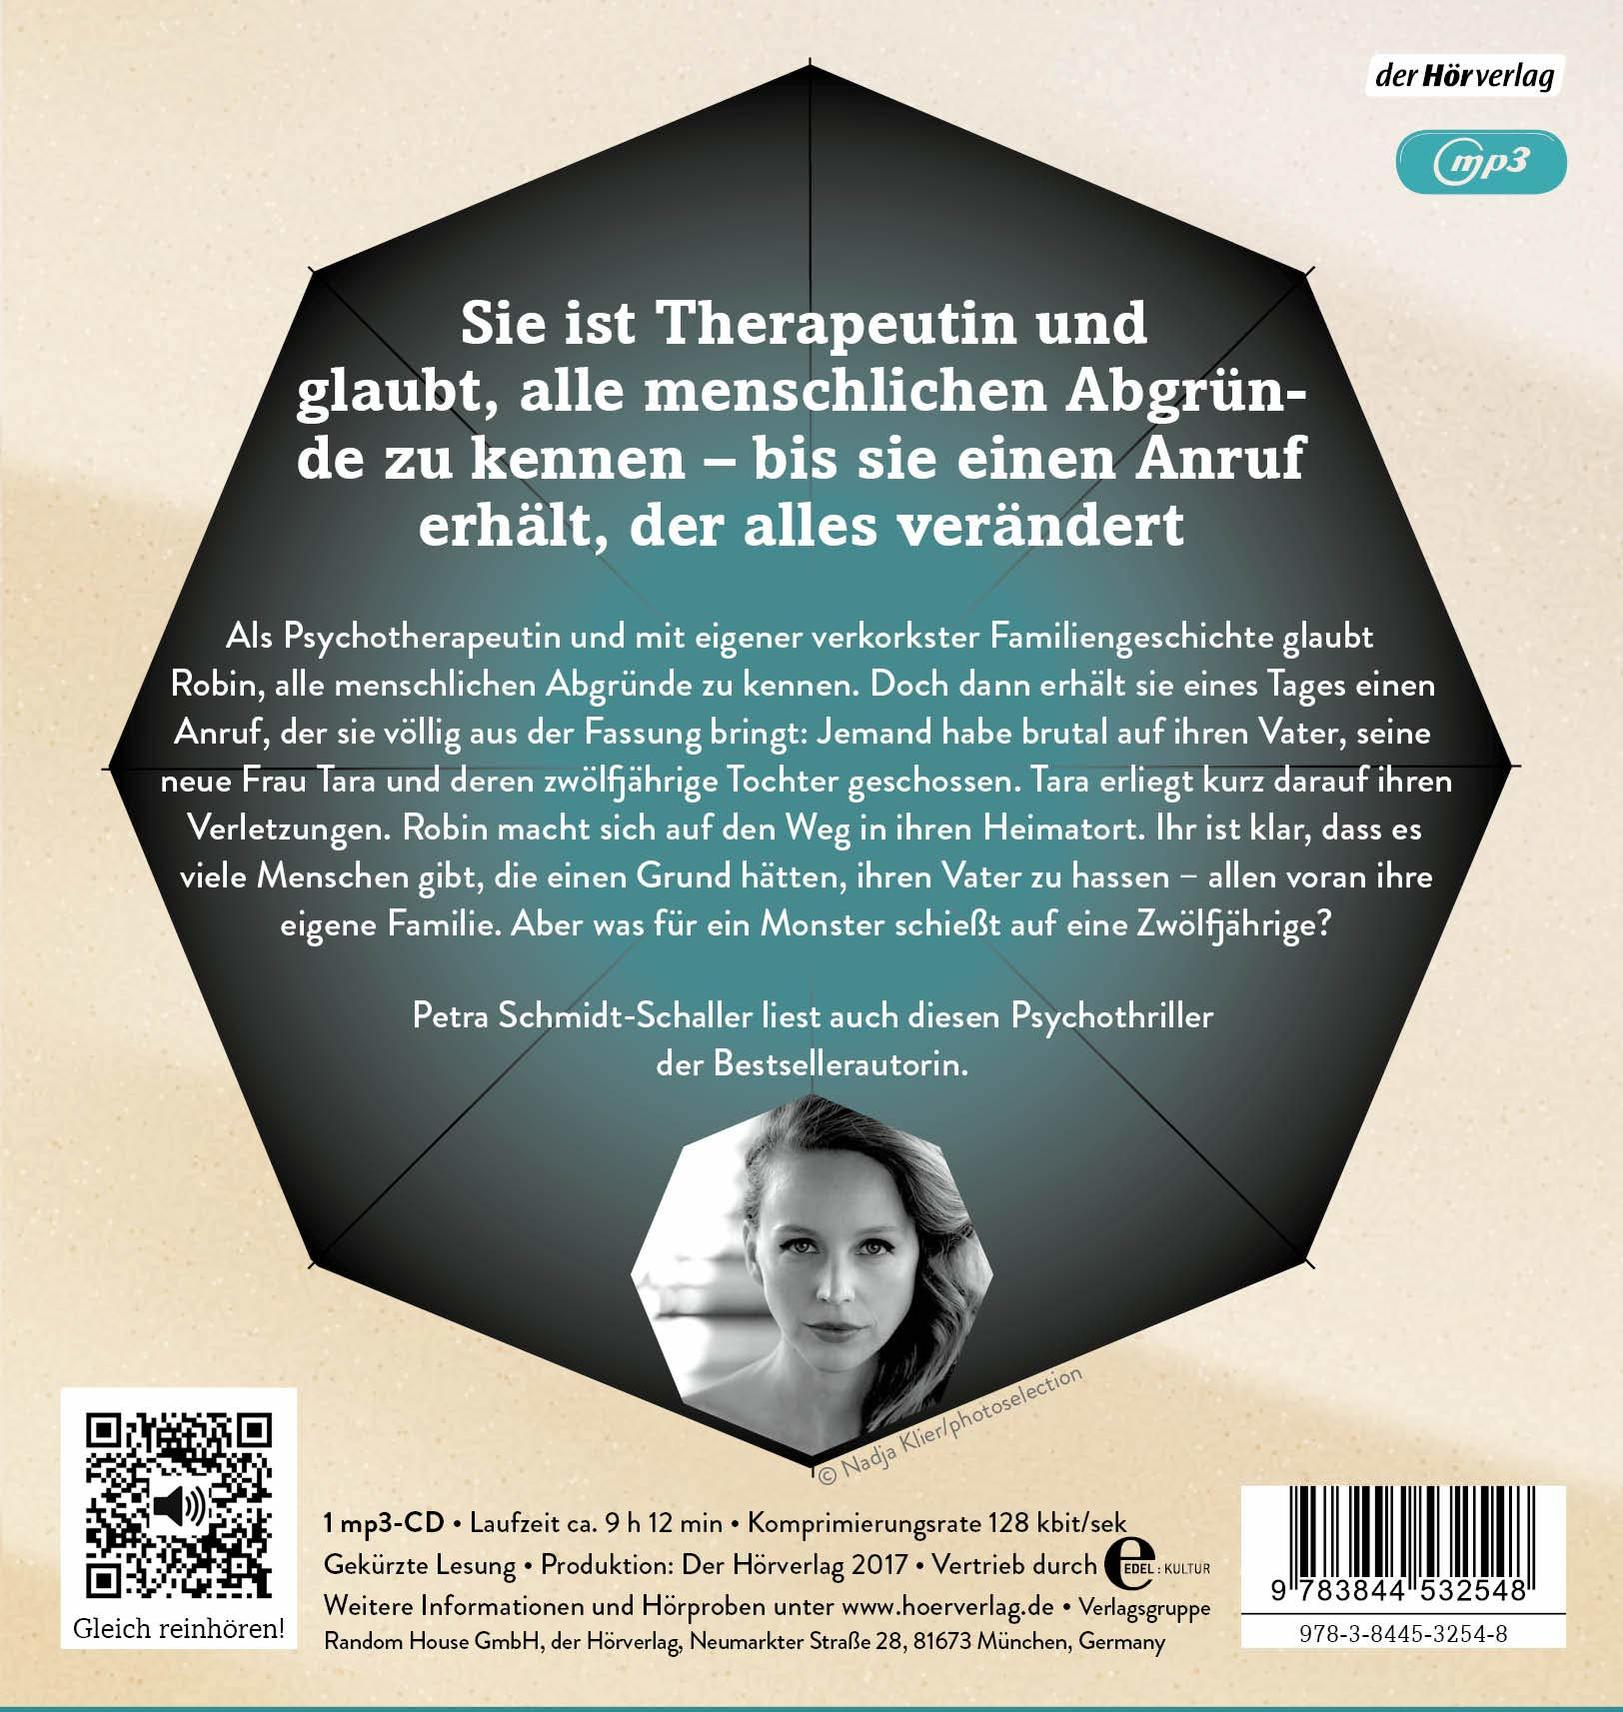 Petra du Schmidt-schaller - atmest Solange - (MP3-CD)